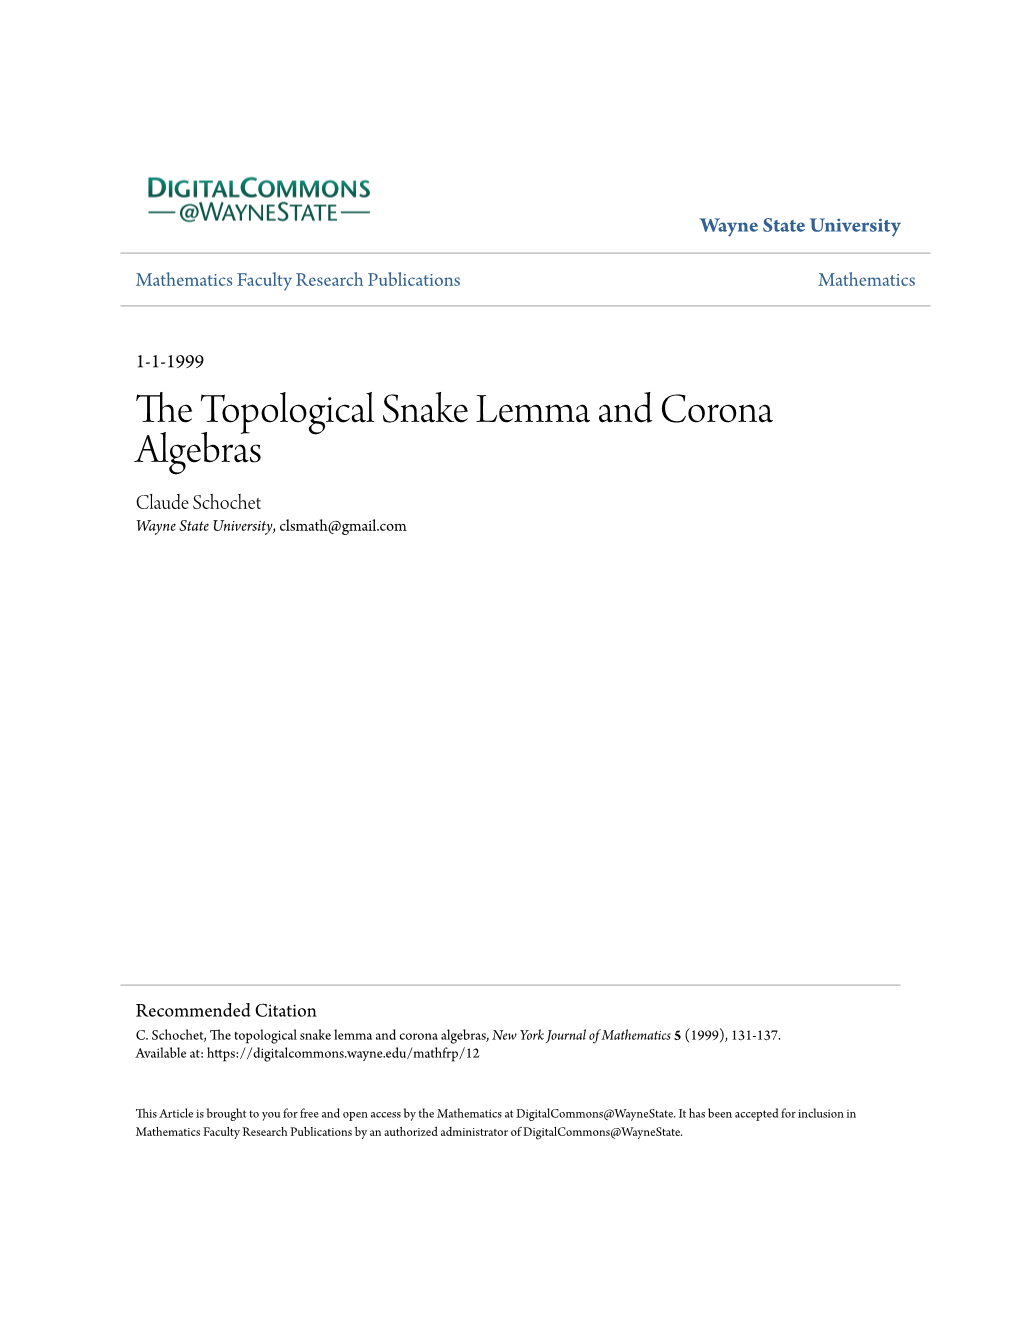 The Topological Snake Lemma and Corona Algebras